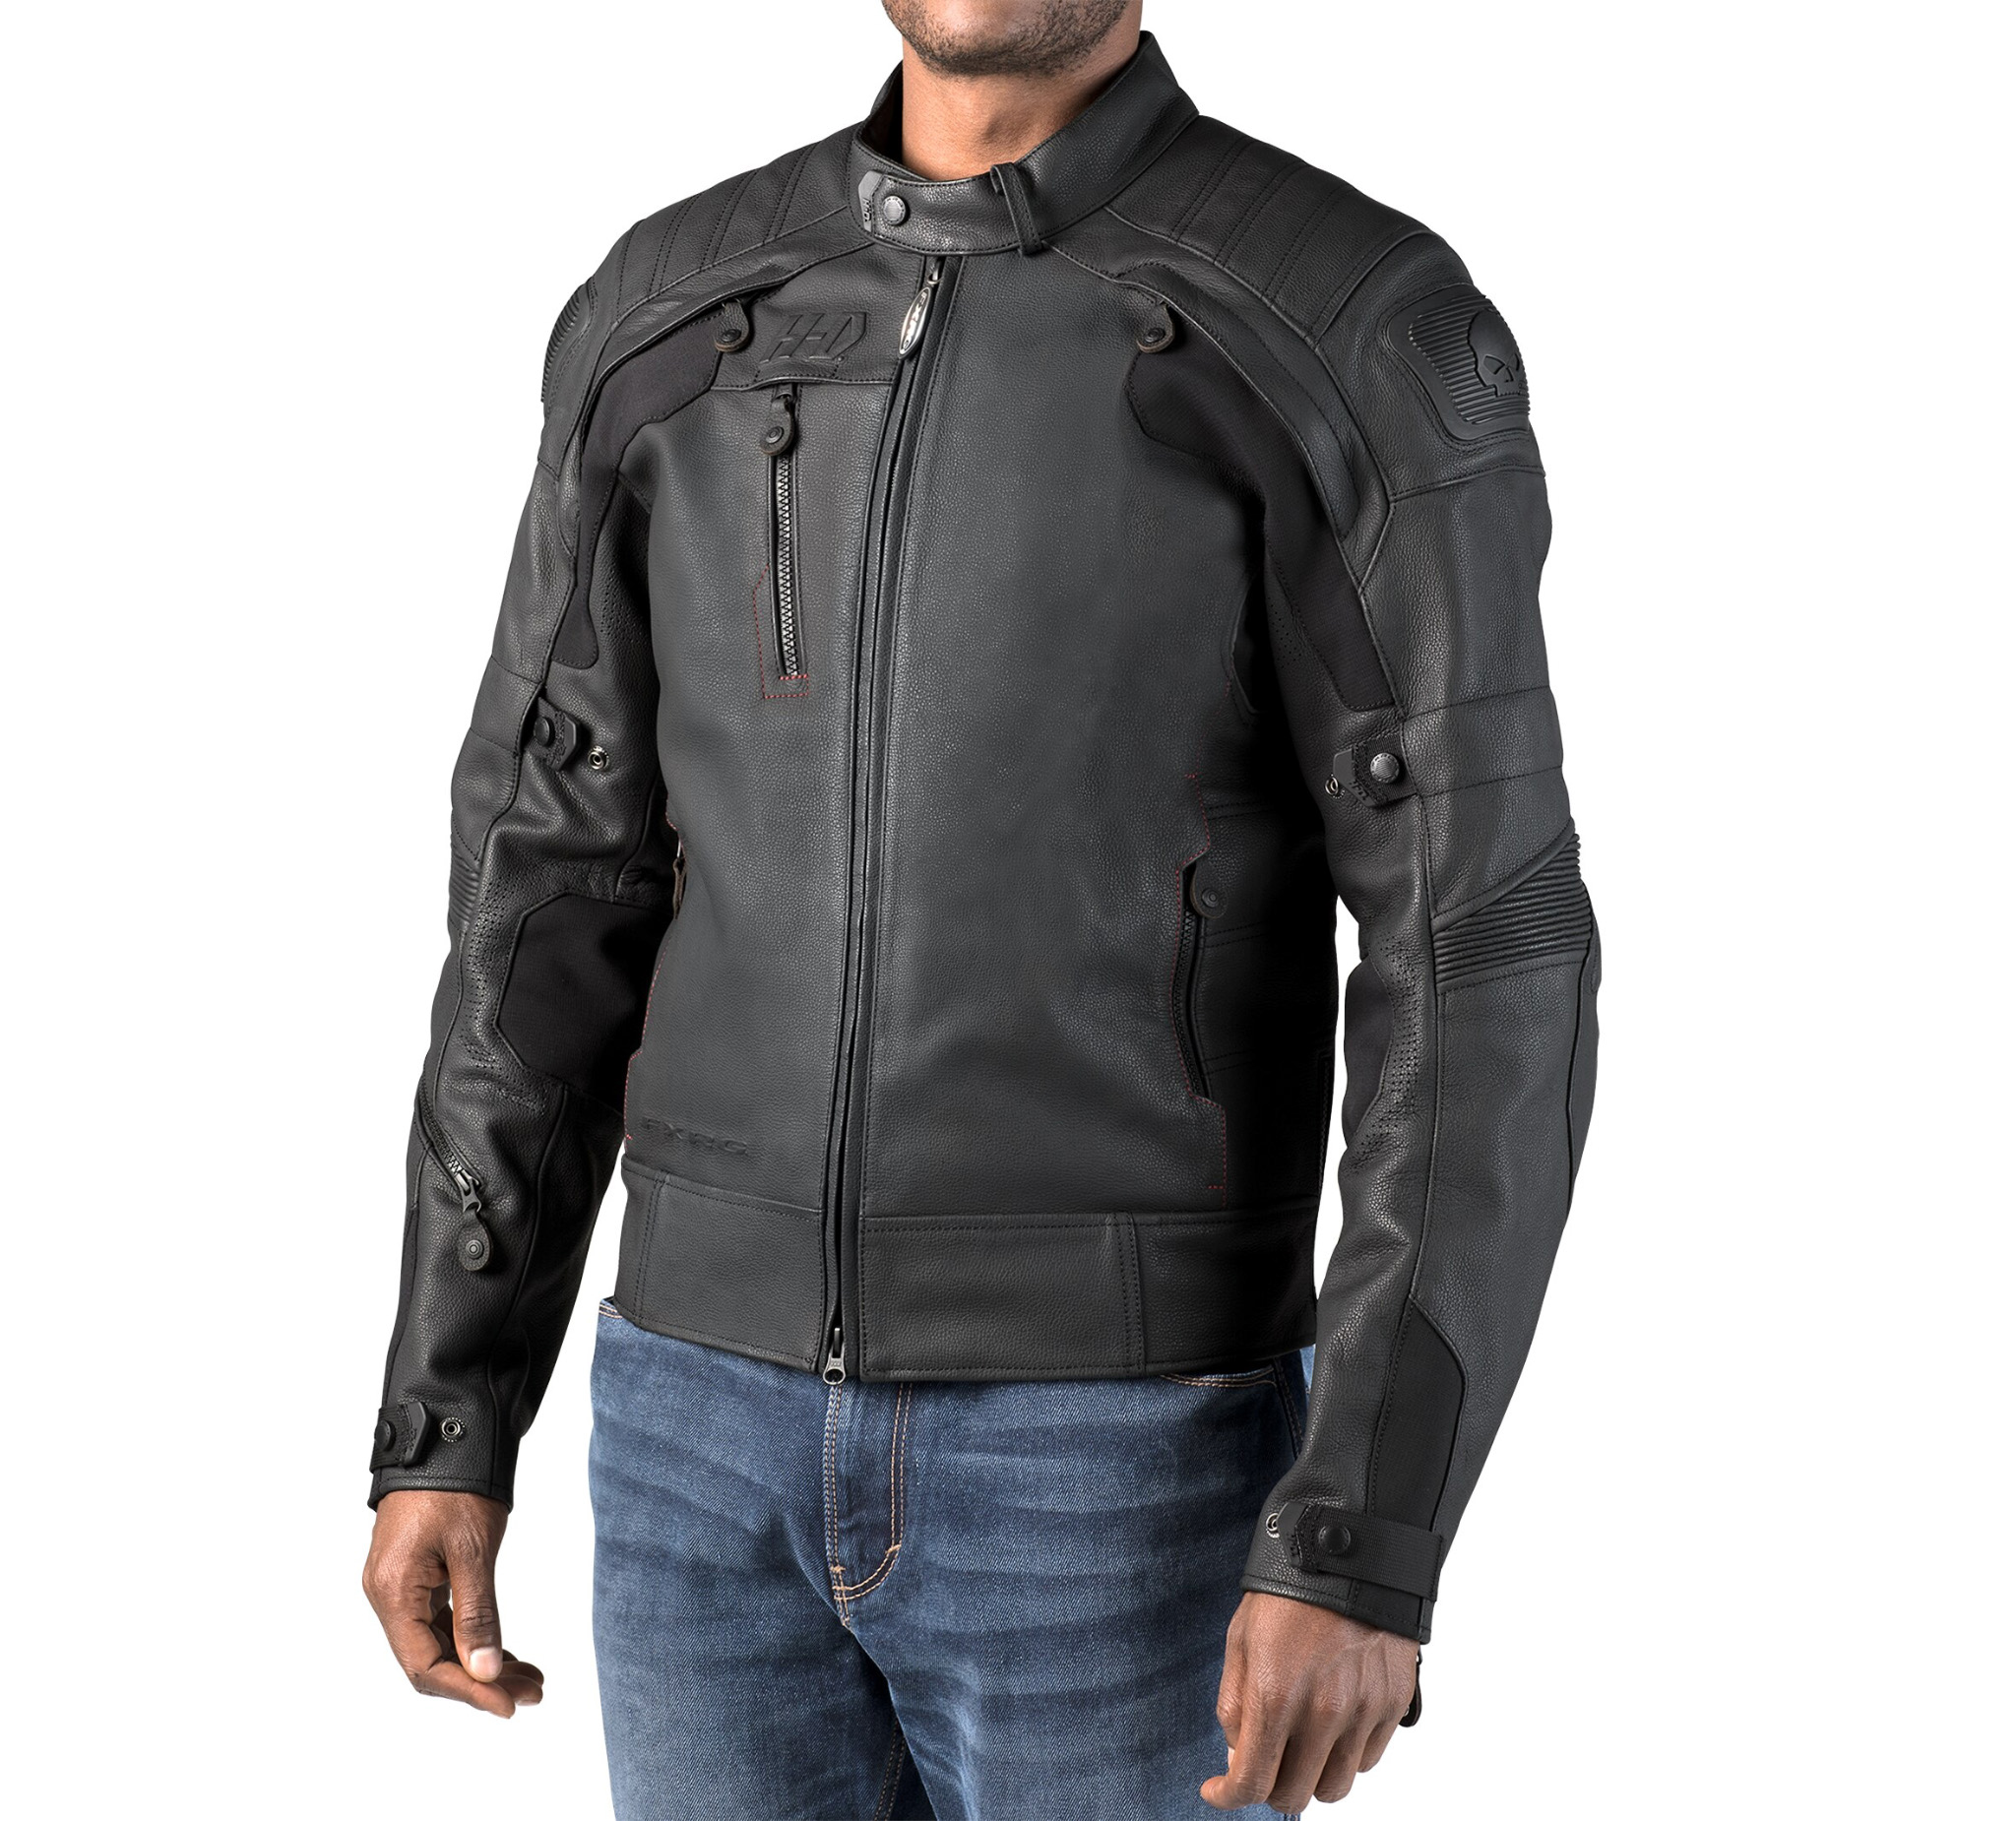 Men S Fxrg Gratify Leather Jacket With Coolcore Technology 98051 19vm Harley Davidson Usa